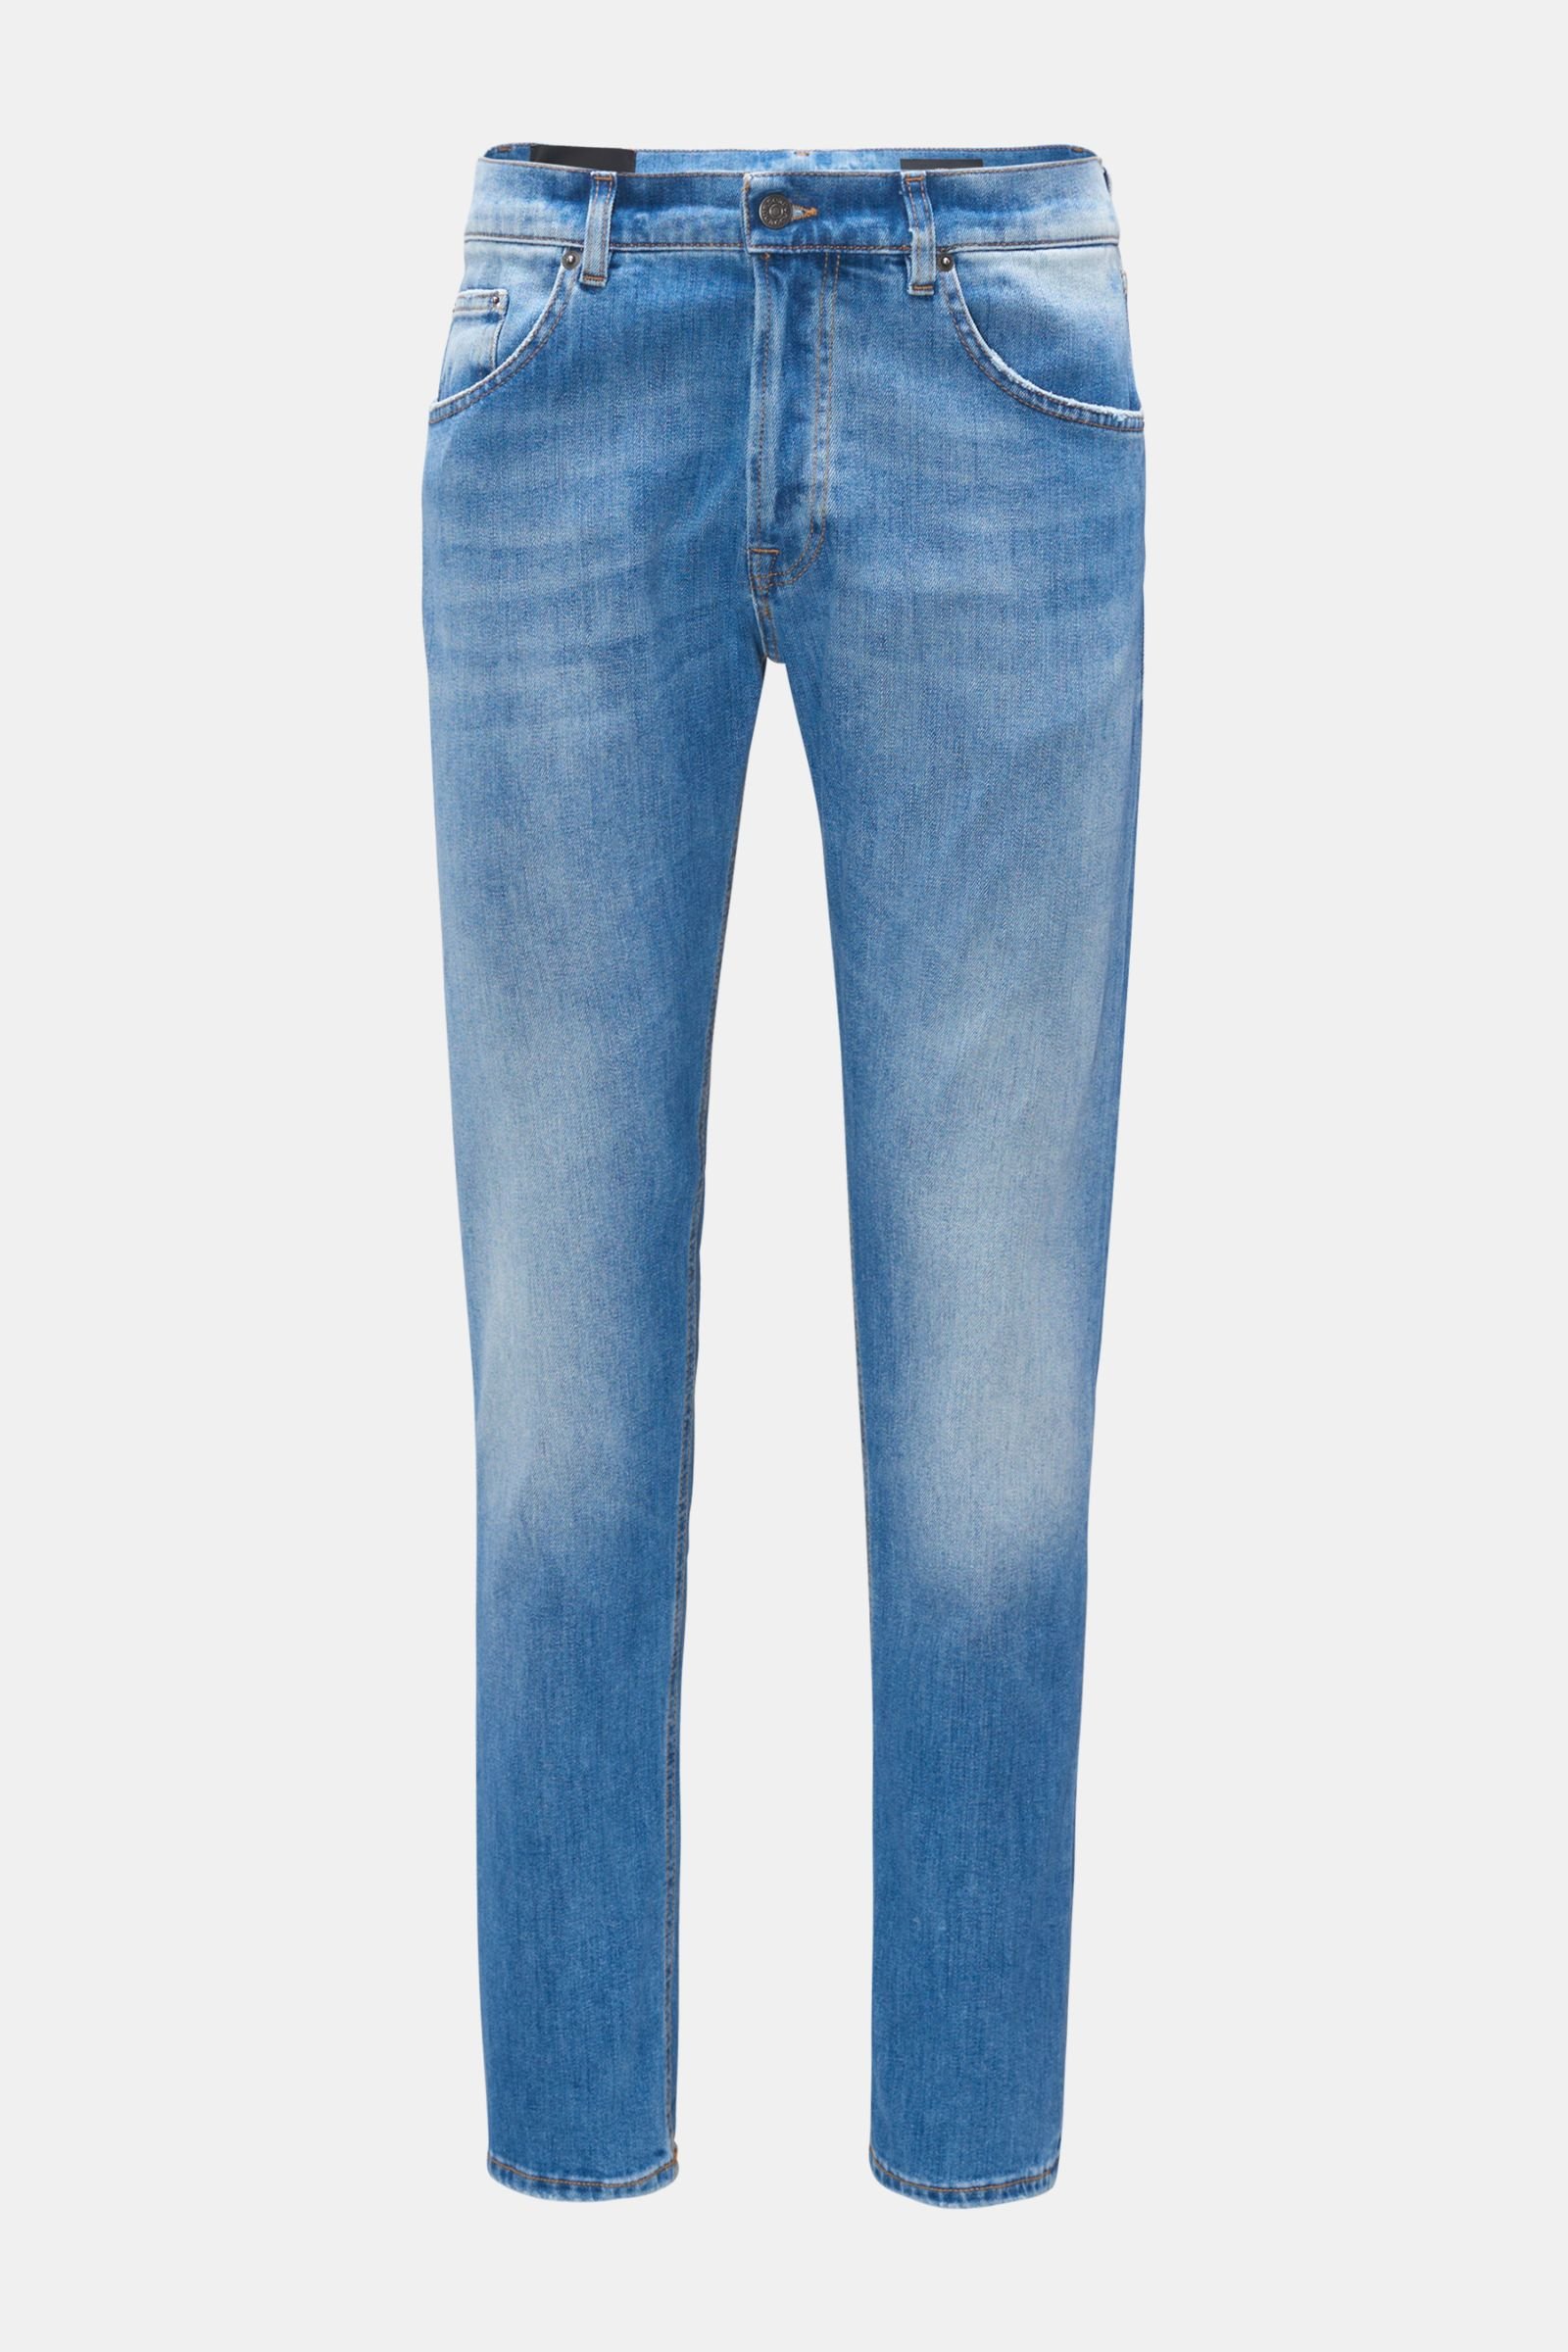 DONDUP jeans 'Icon regular fit' light blue | BRAUN Hamburg